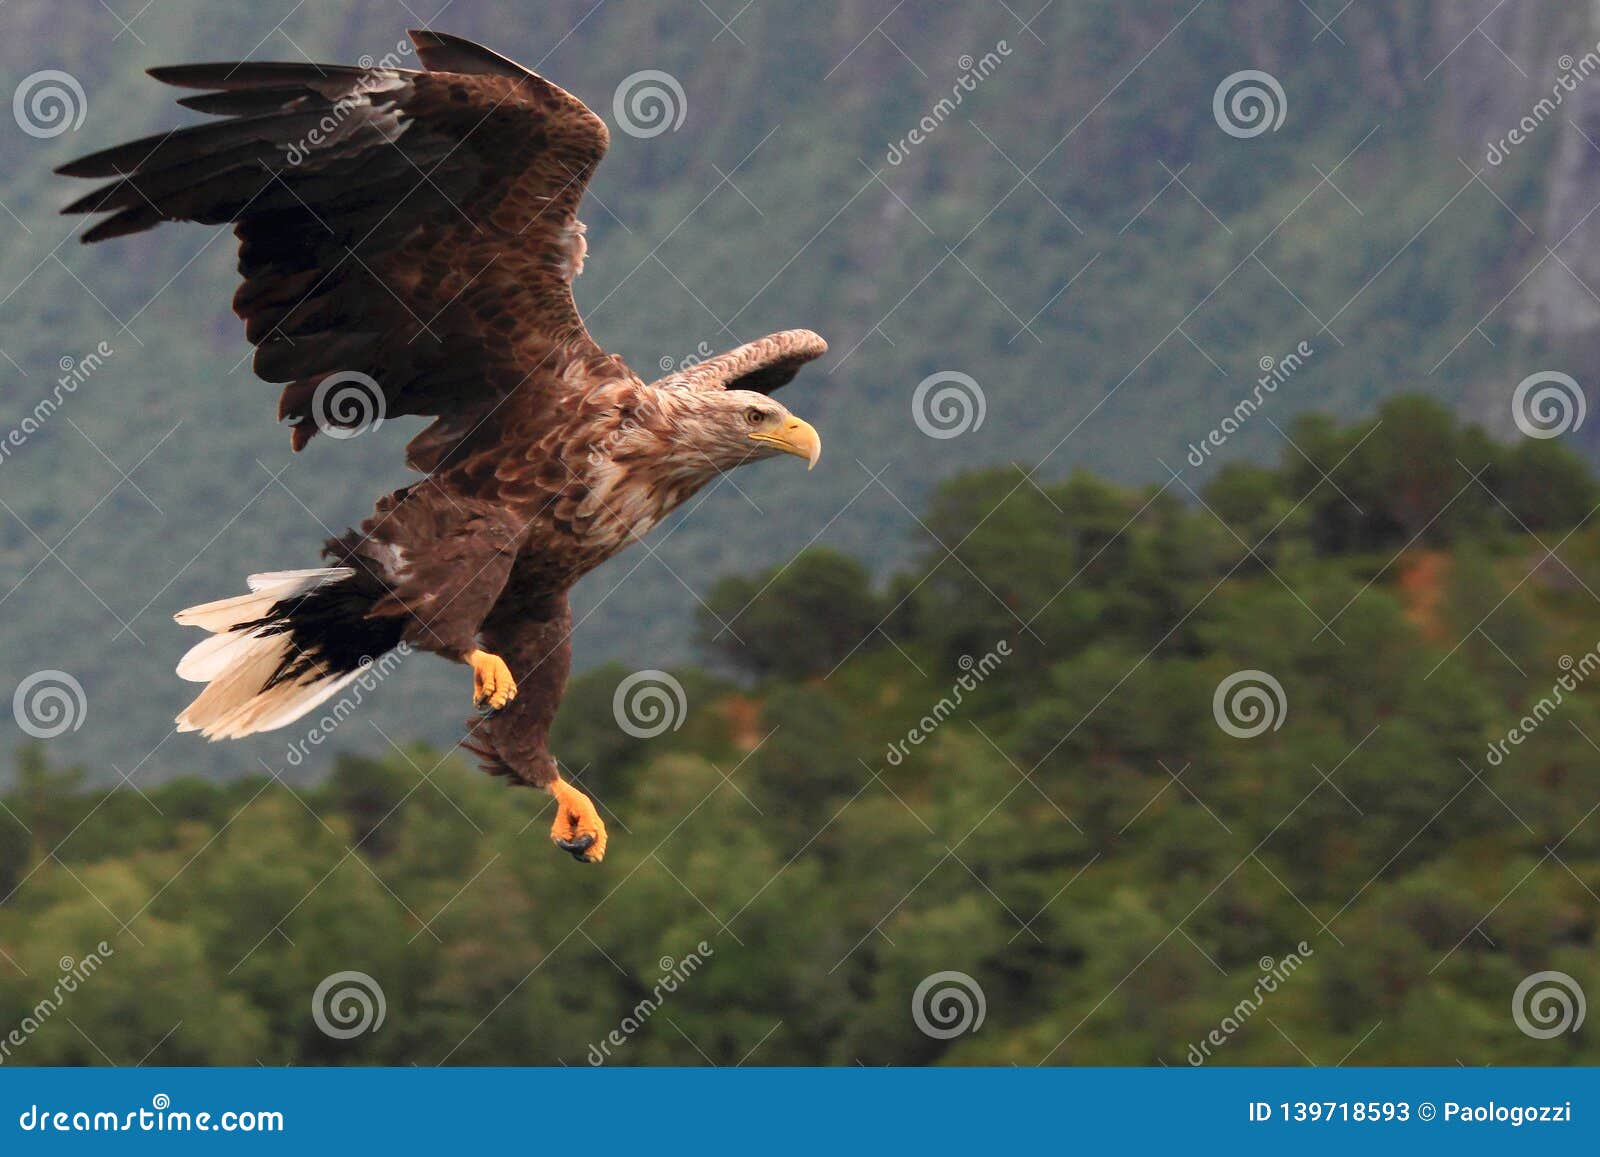 sea eagle landing asimmetrically in a fjord of lofoten